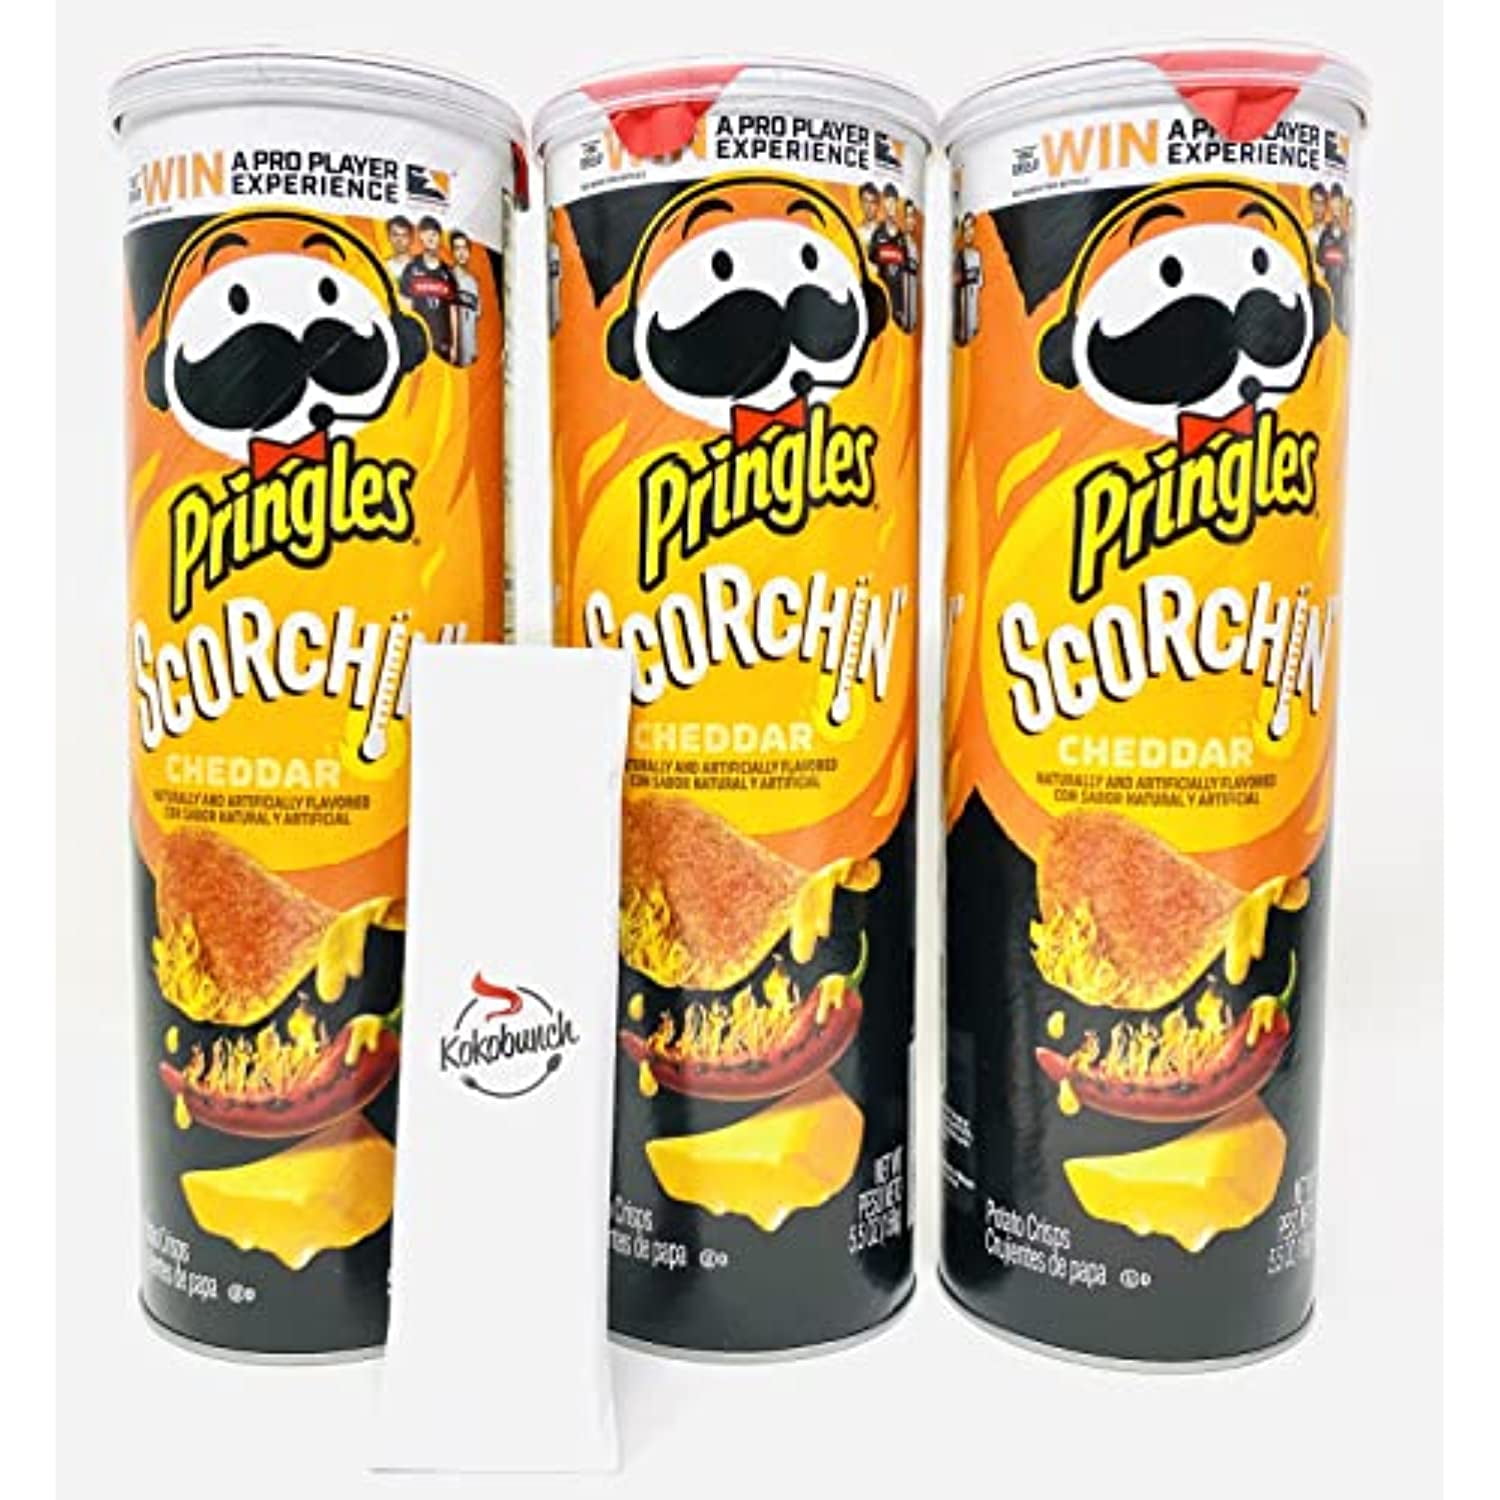 Pringles Scorchin Pack Potato Chip Snack Packs - Cheddar Potato Crips ...